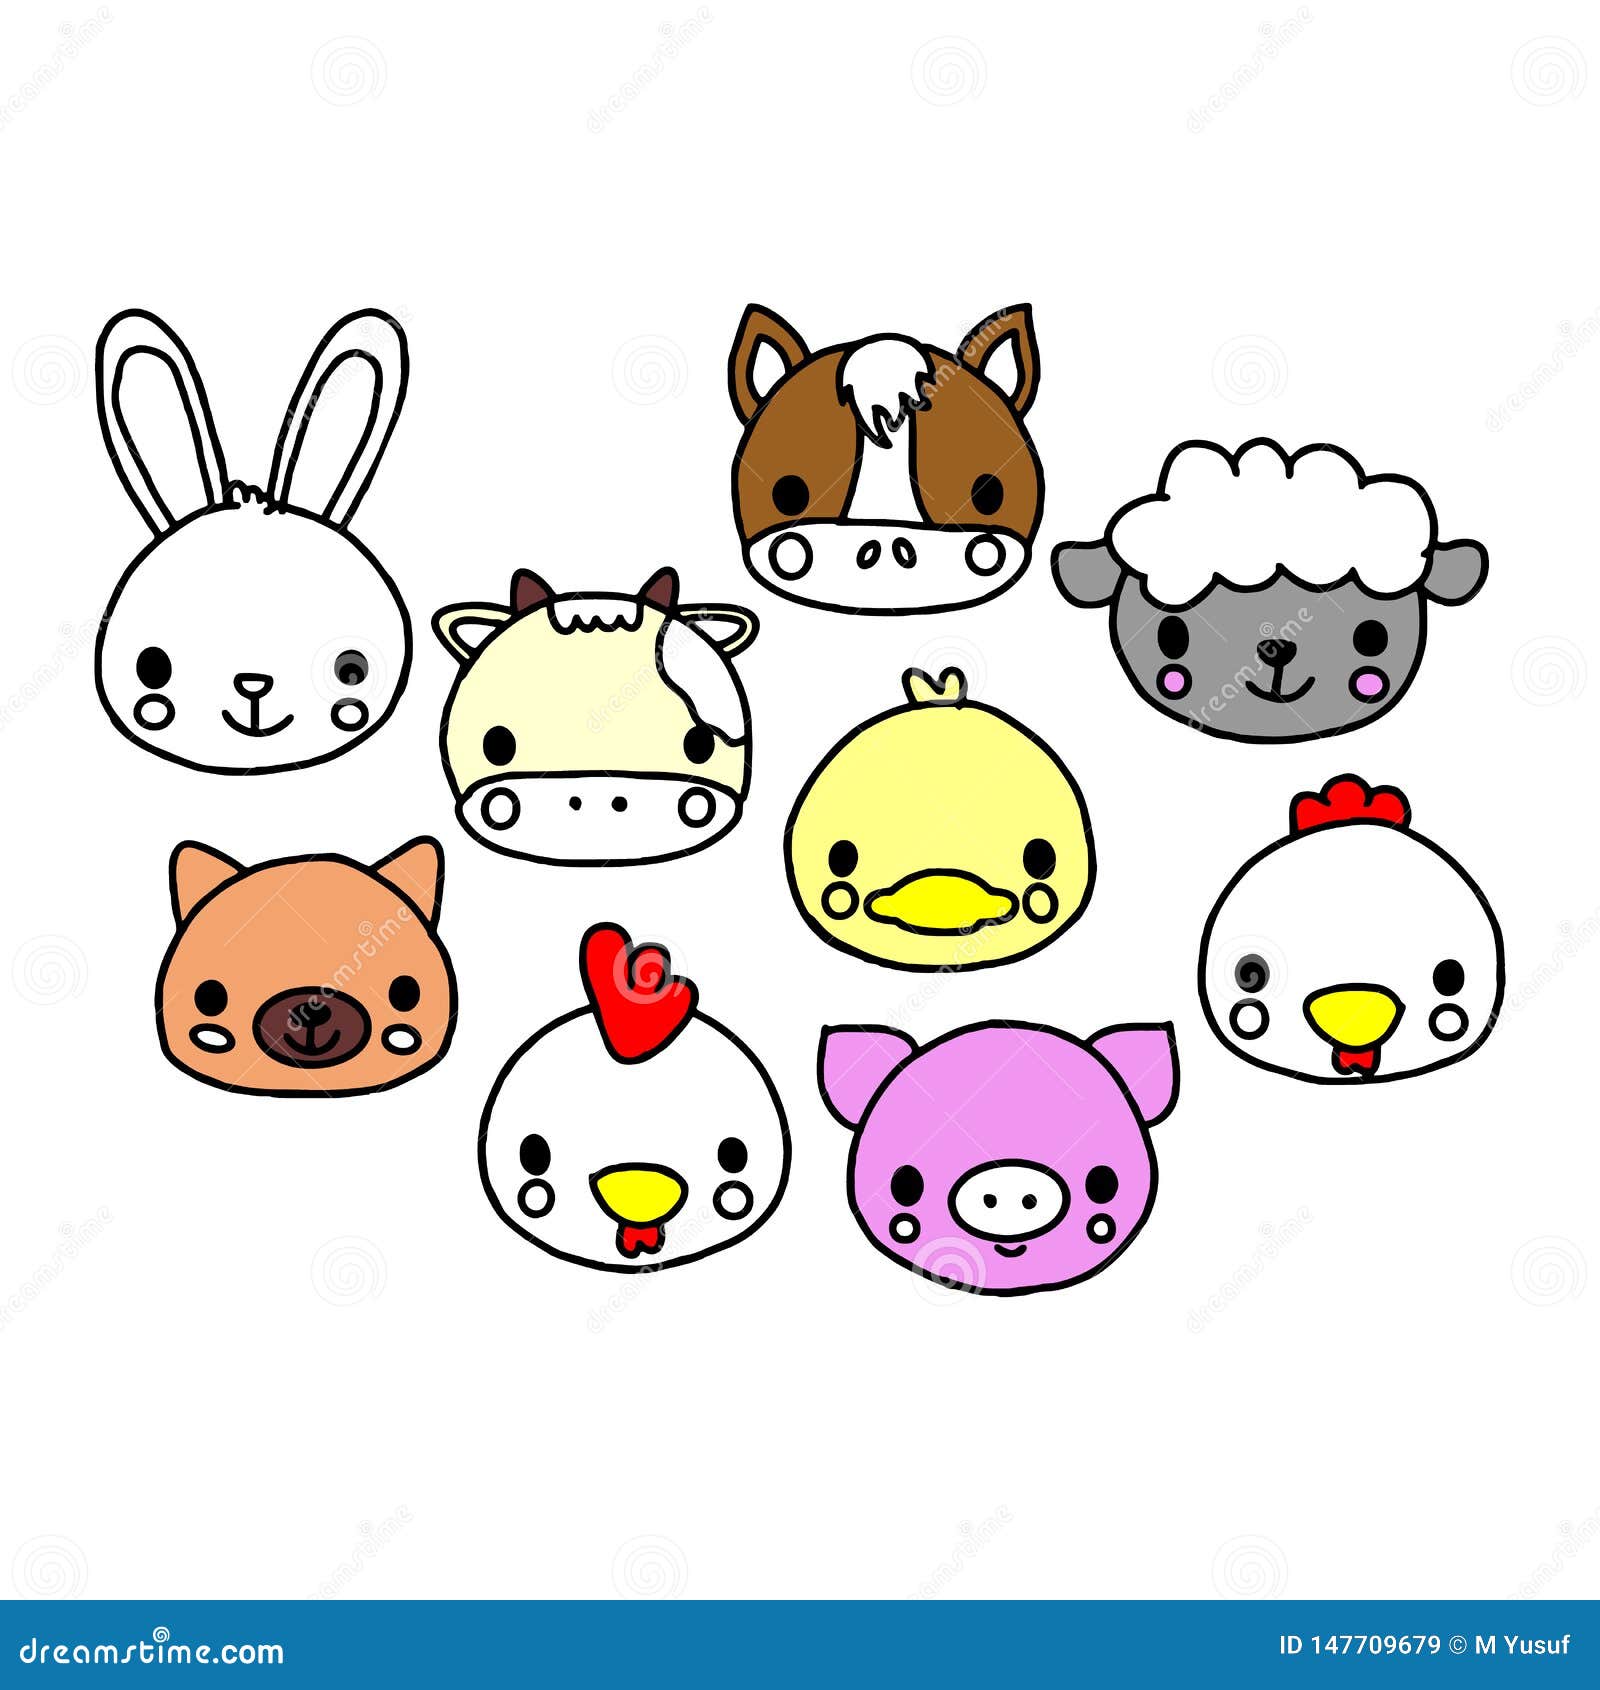 Cute Animal Stickers. Smiling Adorable Animals Stock Illustration -  Illustration of hare, giraffe: 147709679